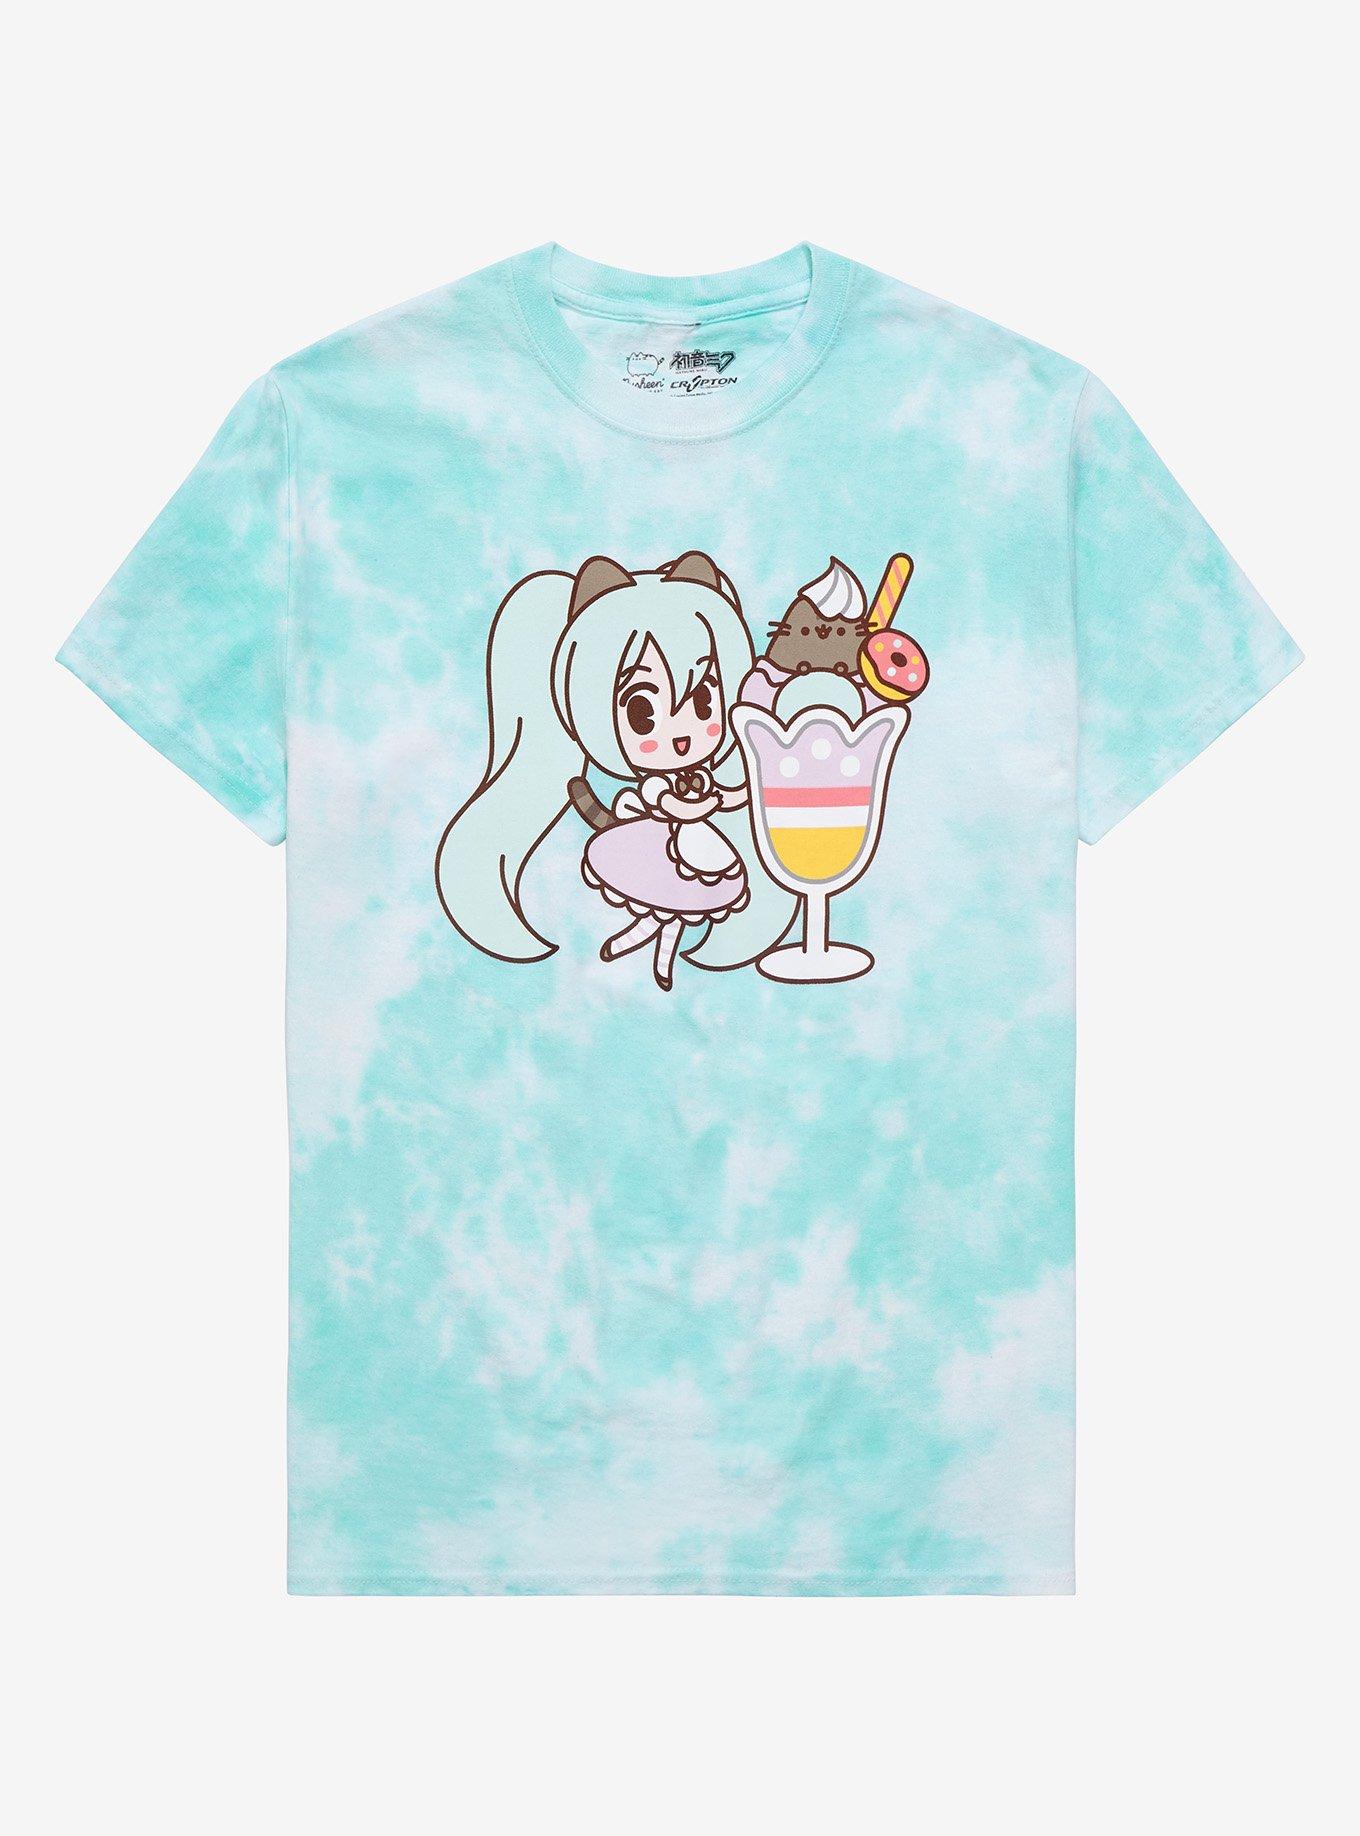 Hatsune Miku X Pusheen Sundae Tie-Dye Girls T-Shirt, MULTI, hi-res